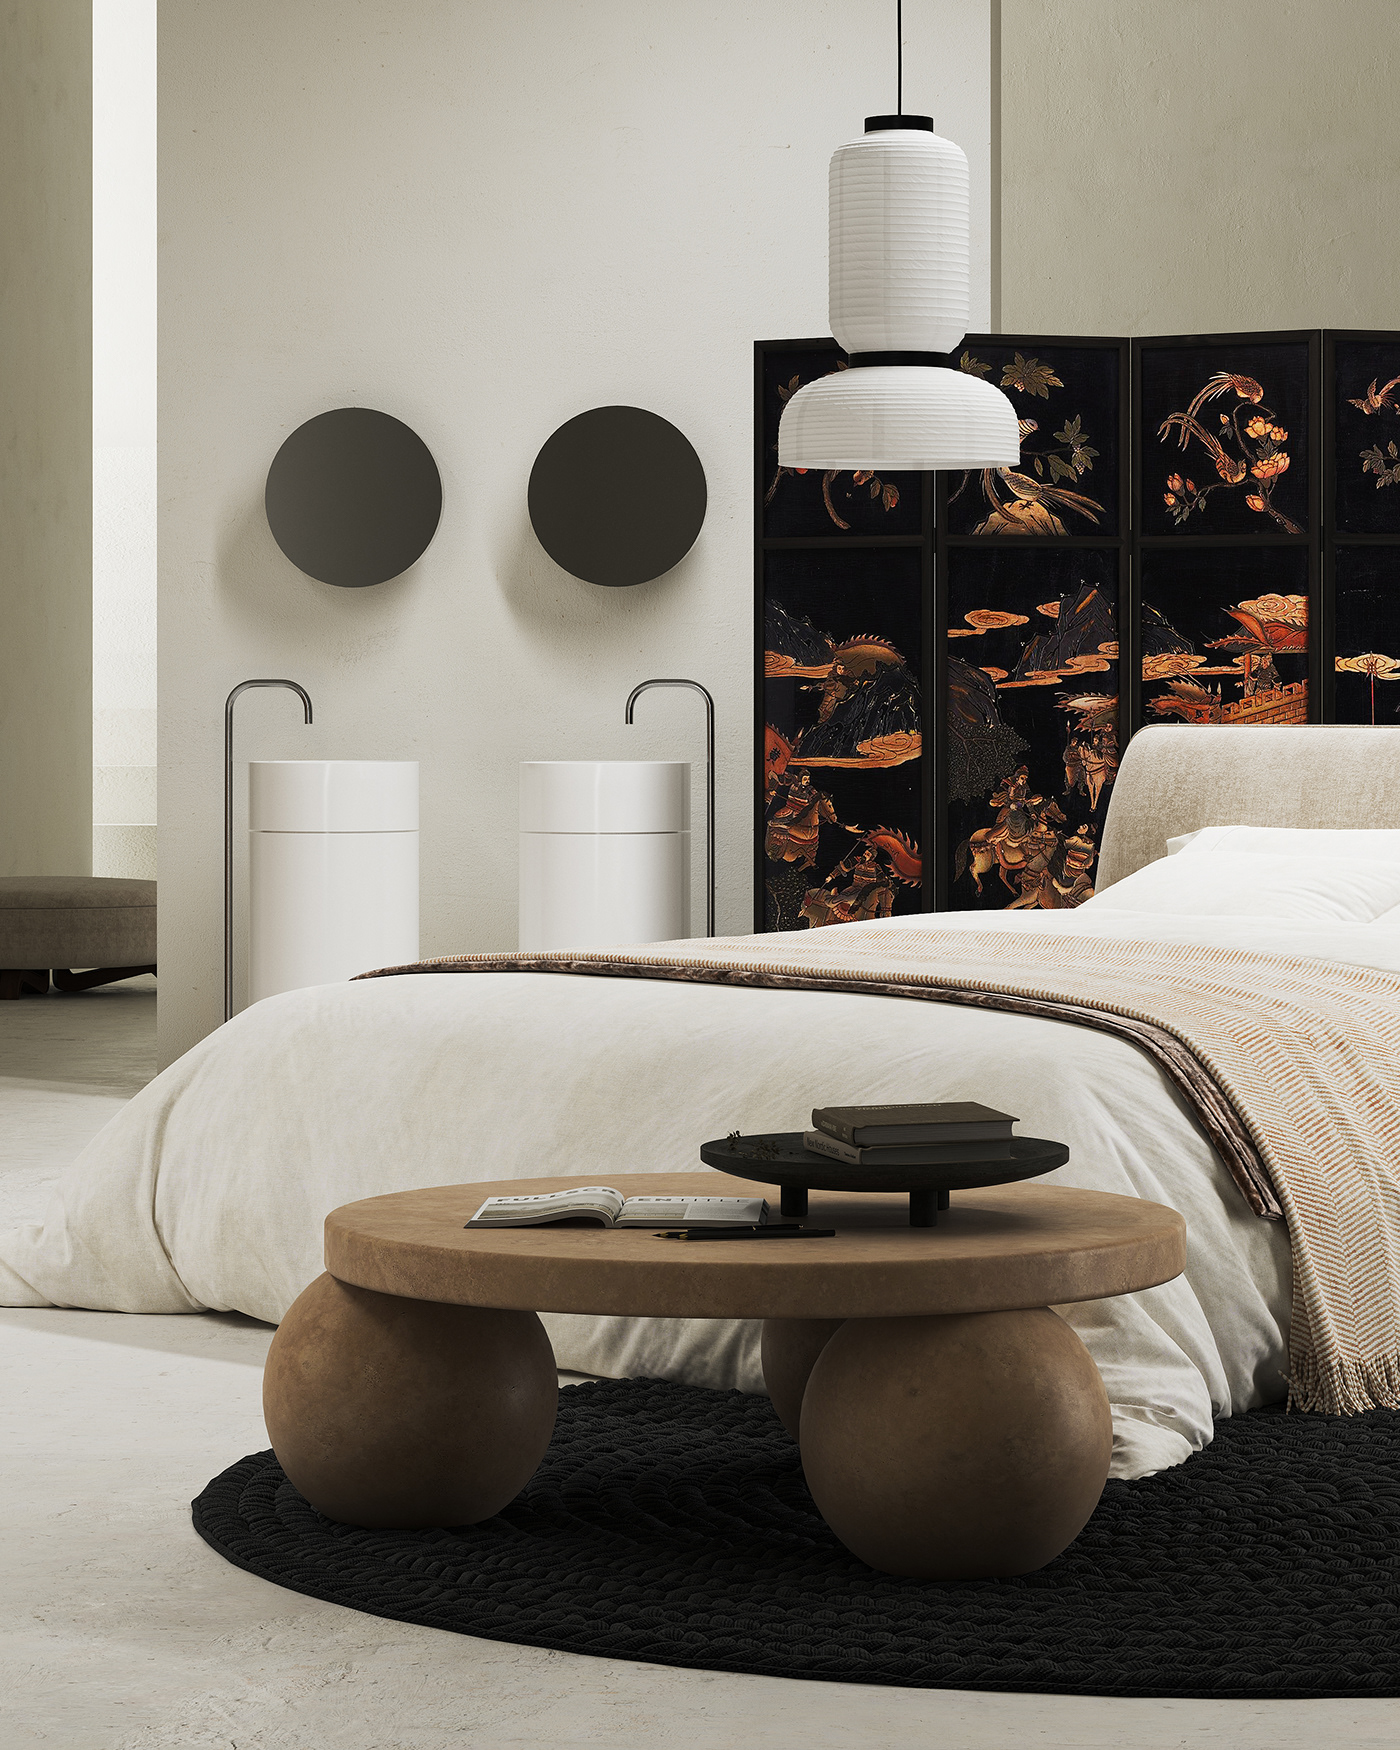 3ds max catalog concept corona render  furniture interior design  Japandy showroom Wabisabi